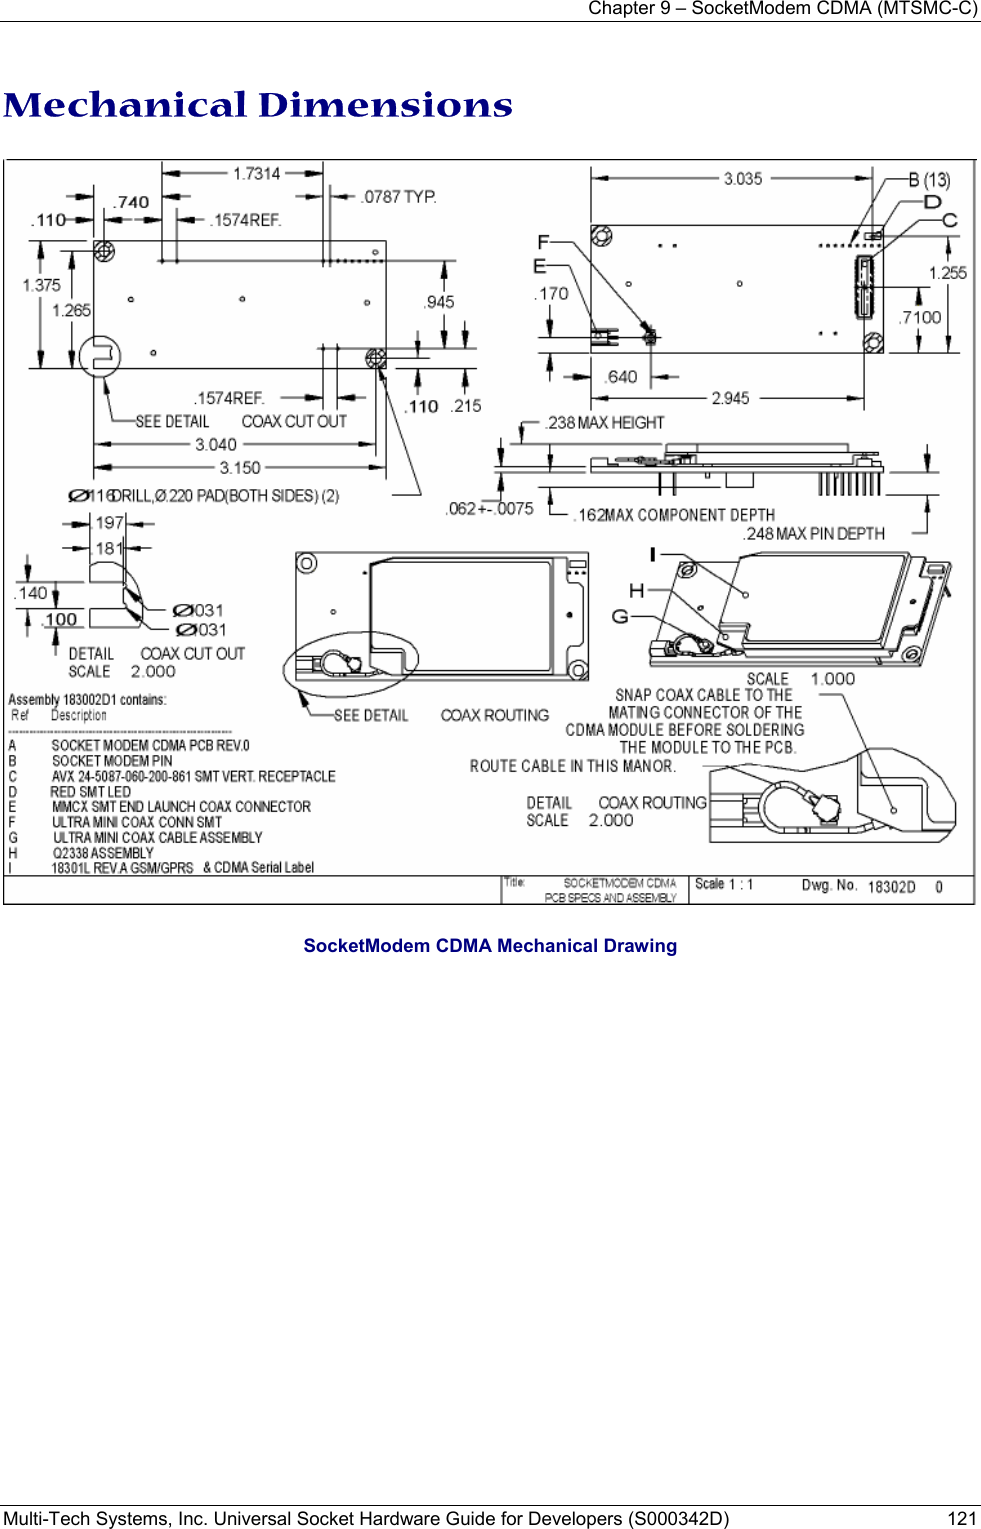 Chapter 9 – SocketModem CDMA (MTSMC-C) Multi-Tech Systems, Inc. Universal Socket Hardware Guide for Developers (S000342D)  121  Mechanical Dimensions   SocketModem CDMA Mechanical Drawing  